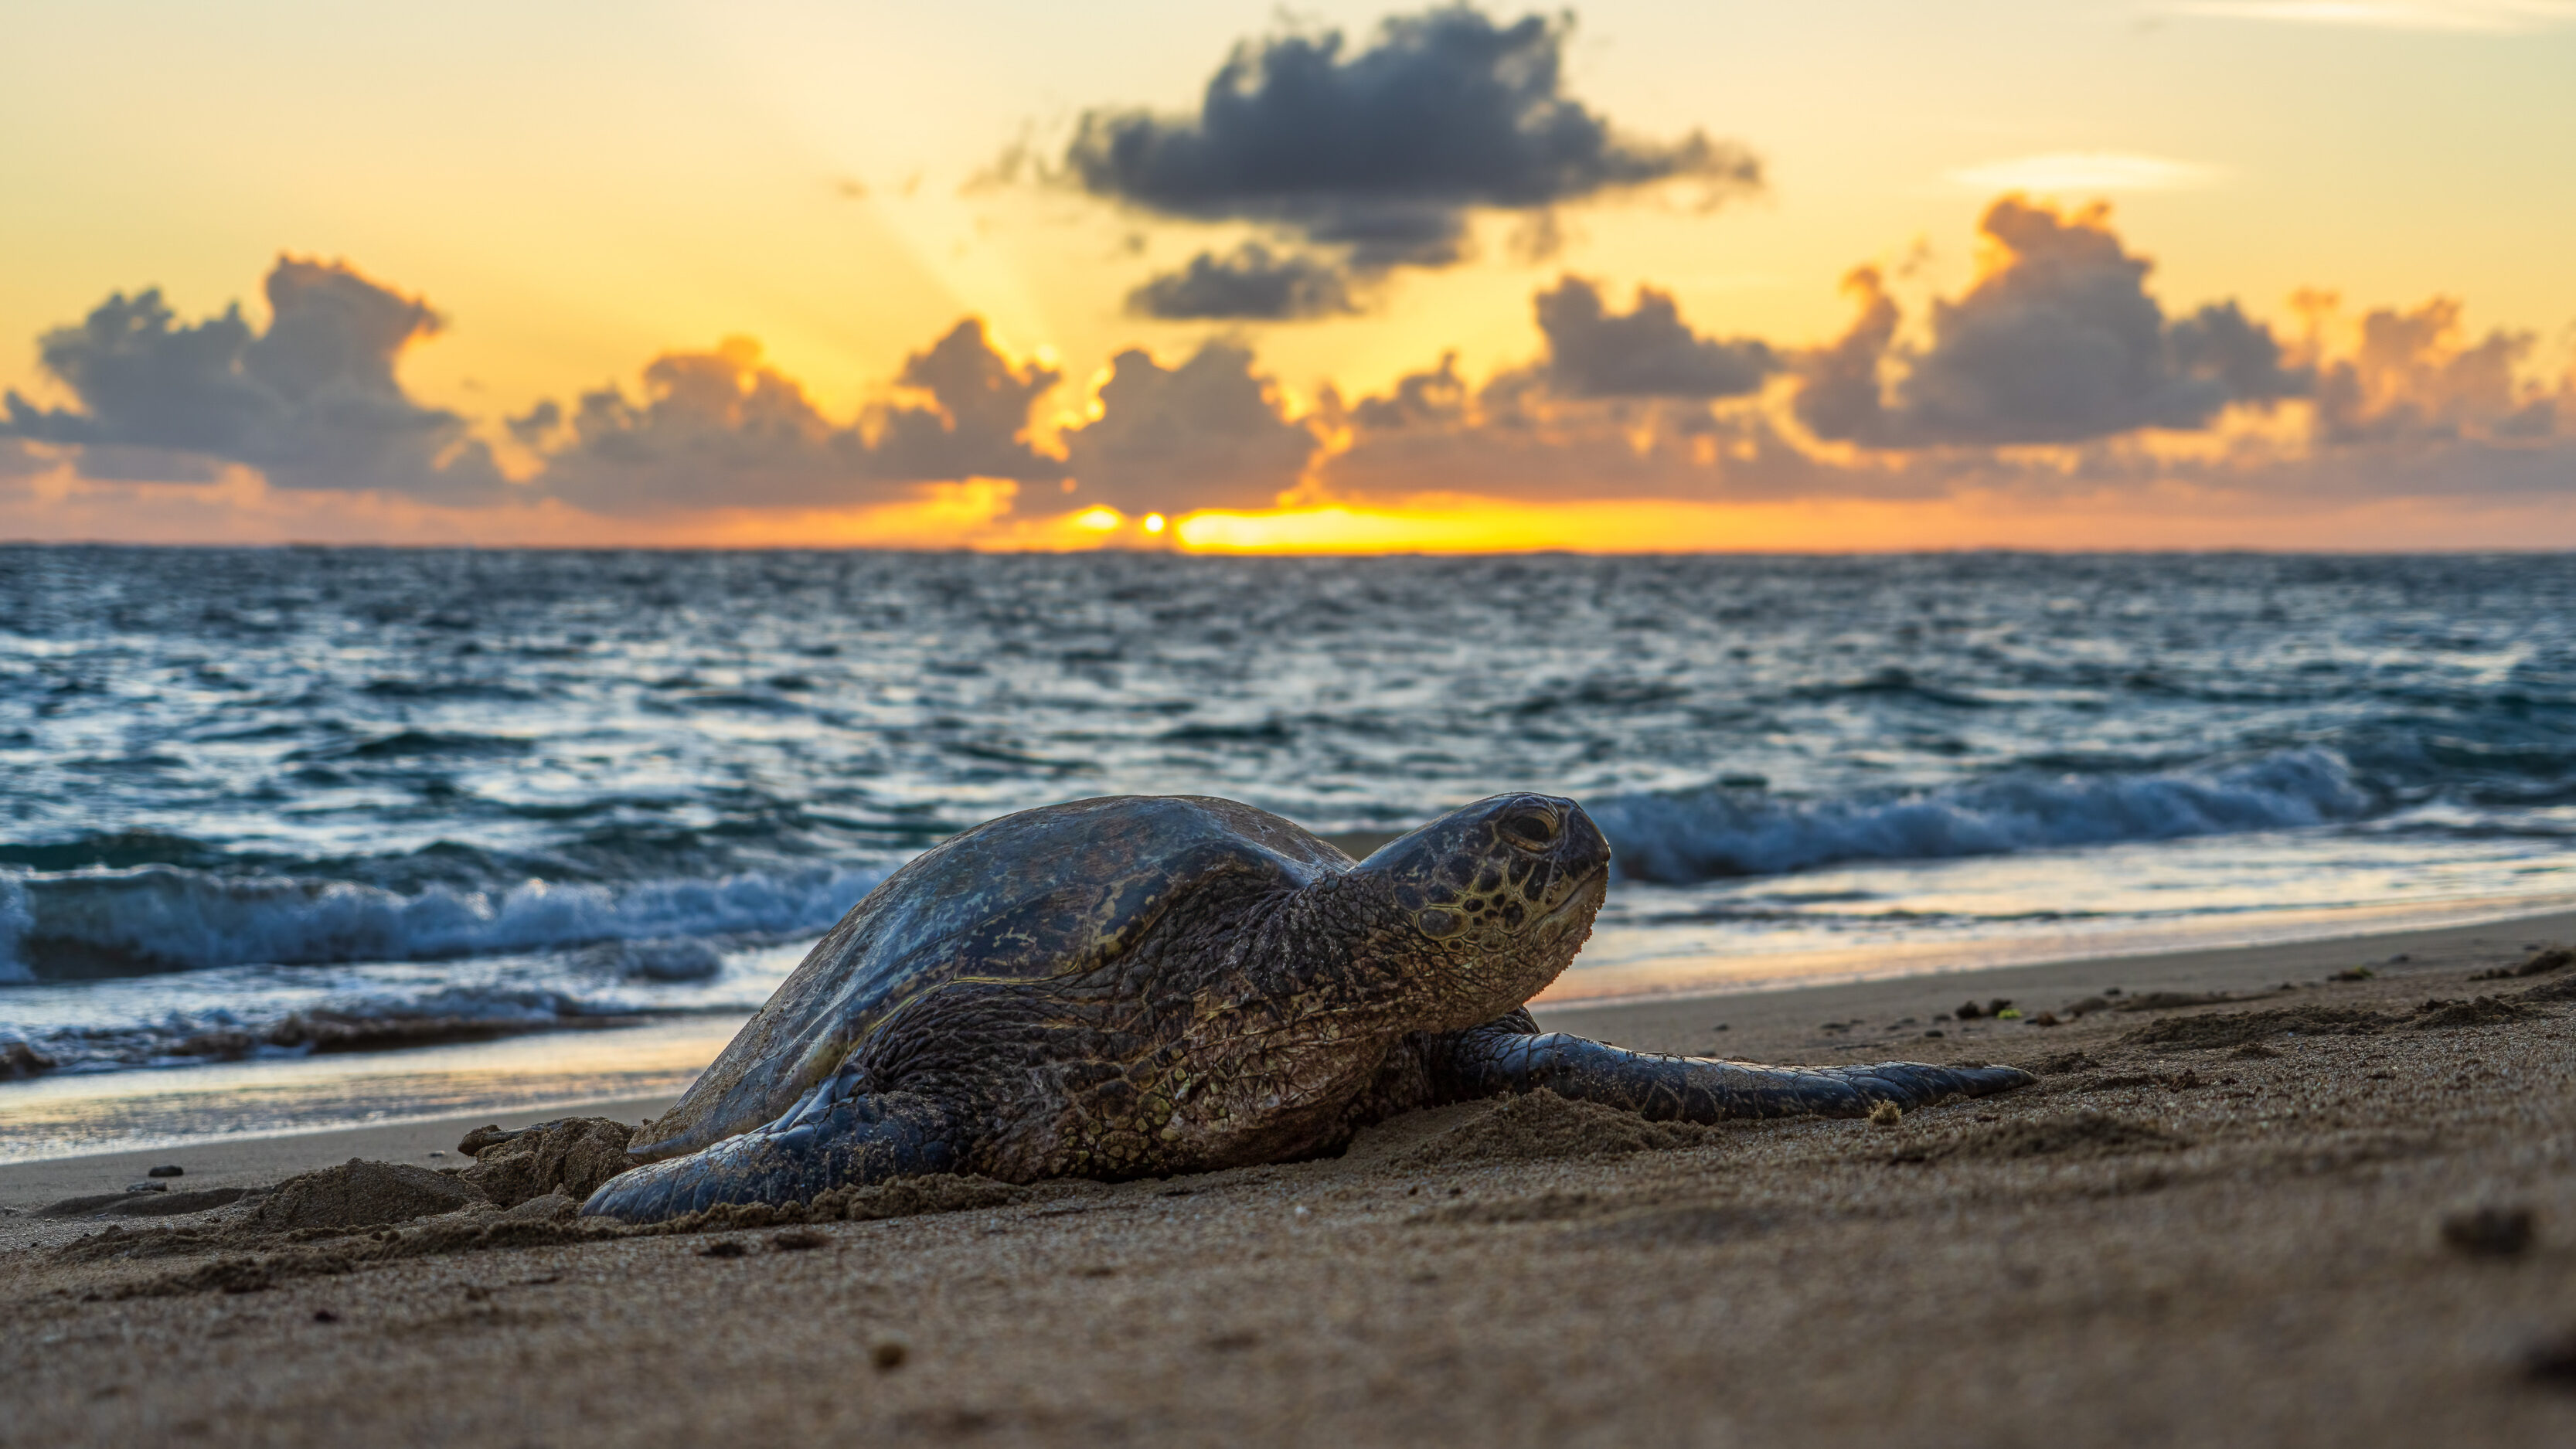 Sunrise And Sea Turtles In Punalu'u